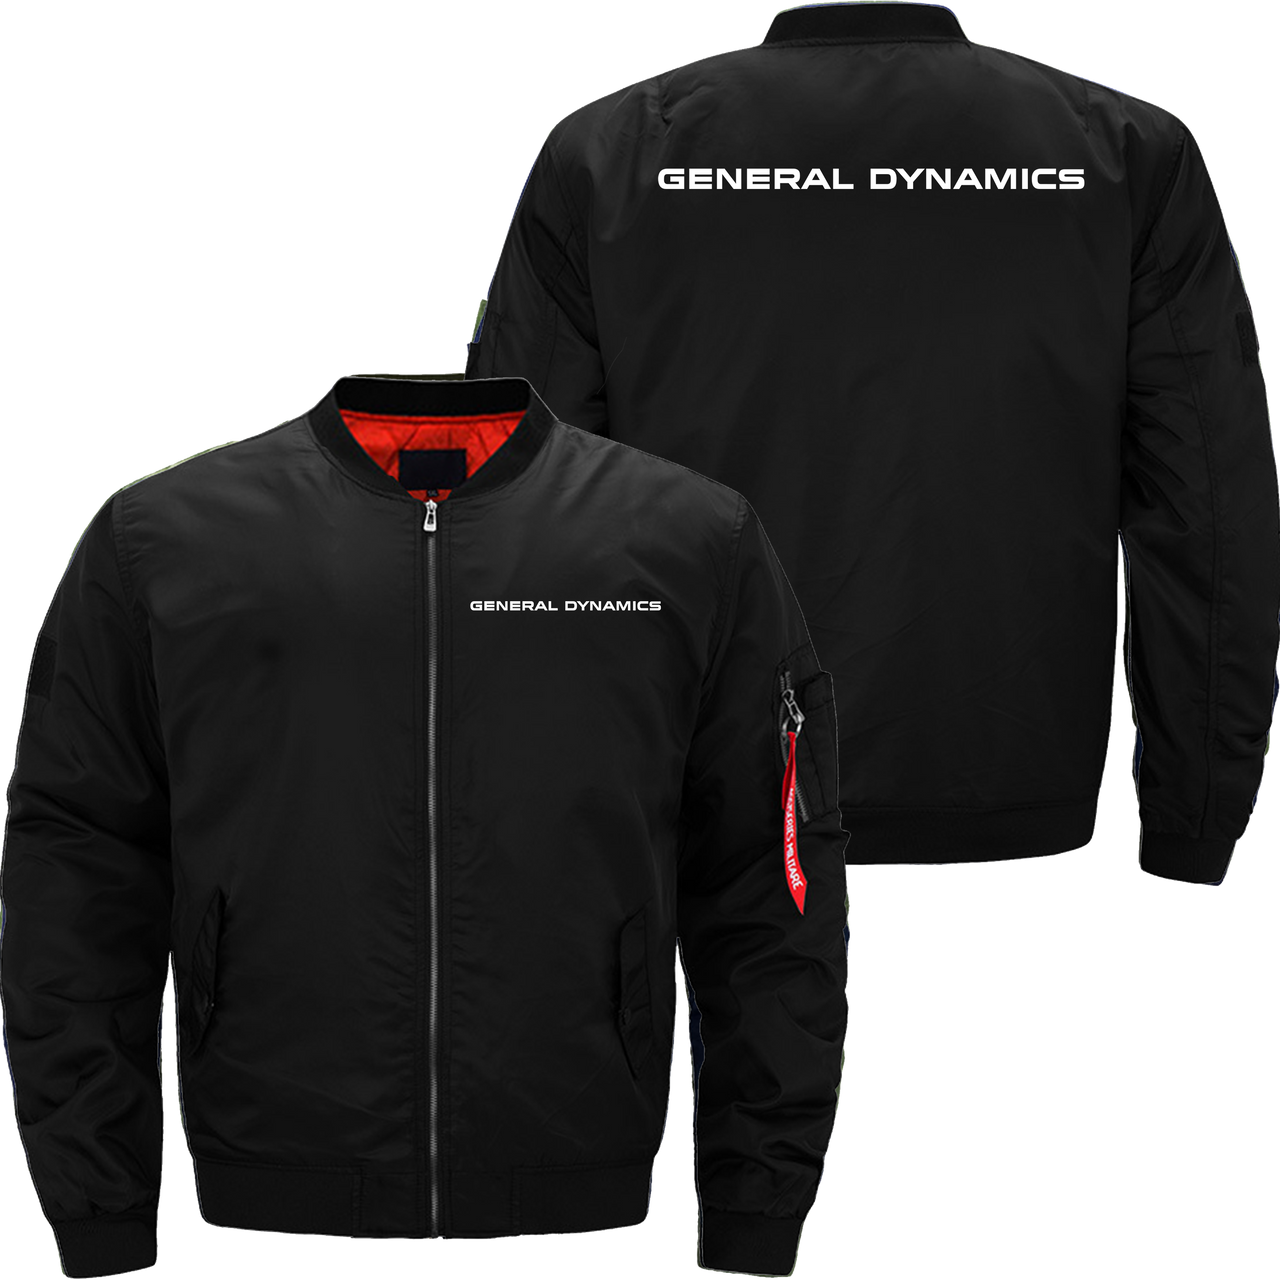 General dynamics Jacket